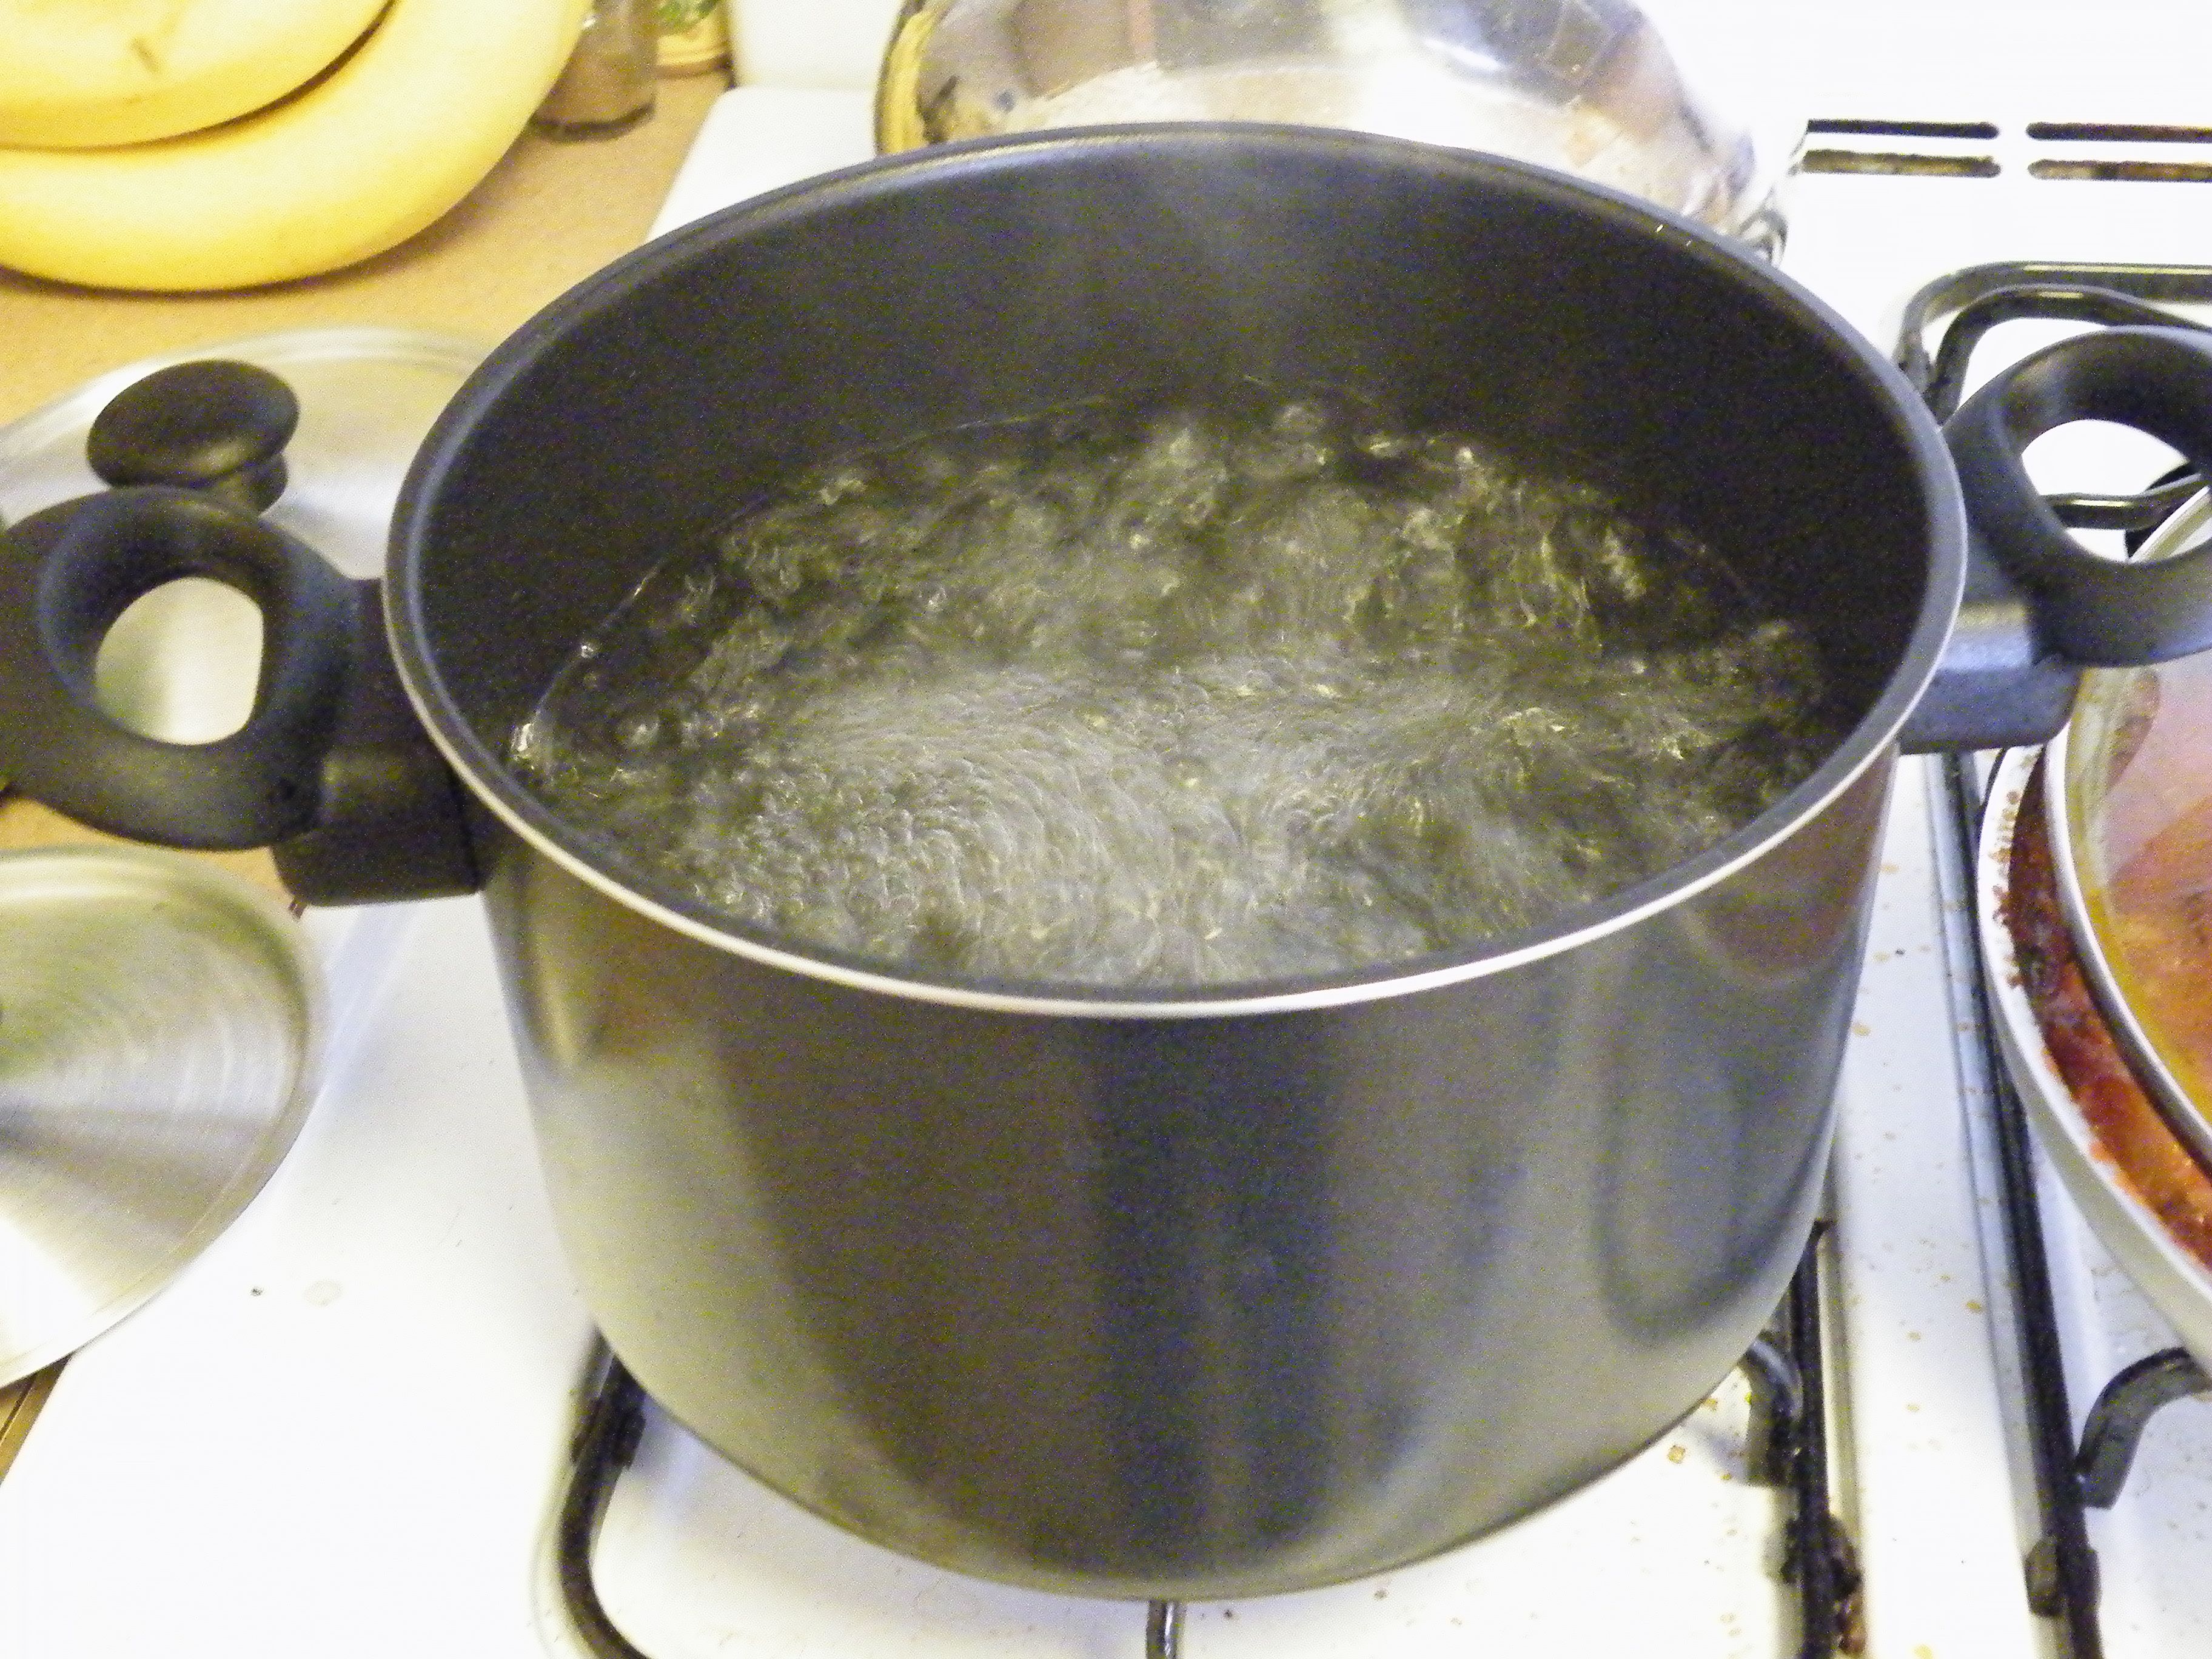 File:Boiling water.jpg - Wikimedia Commons